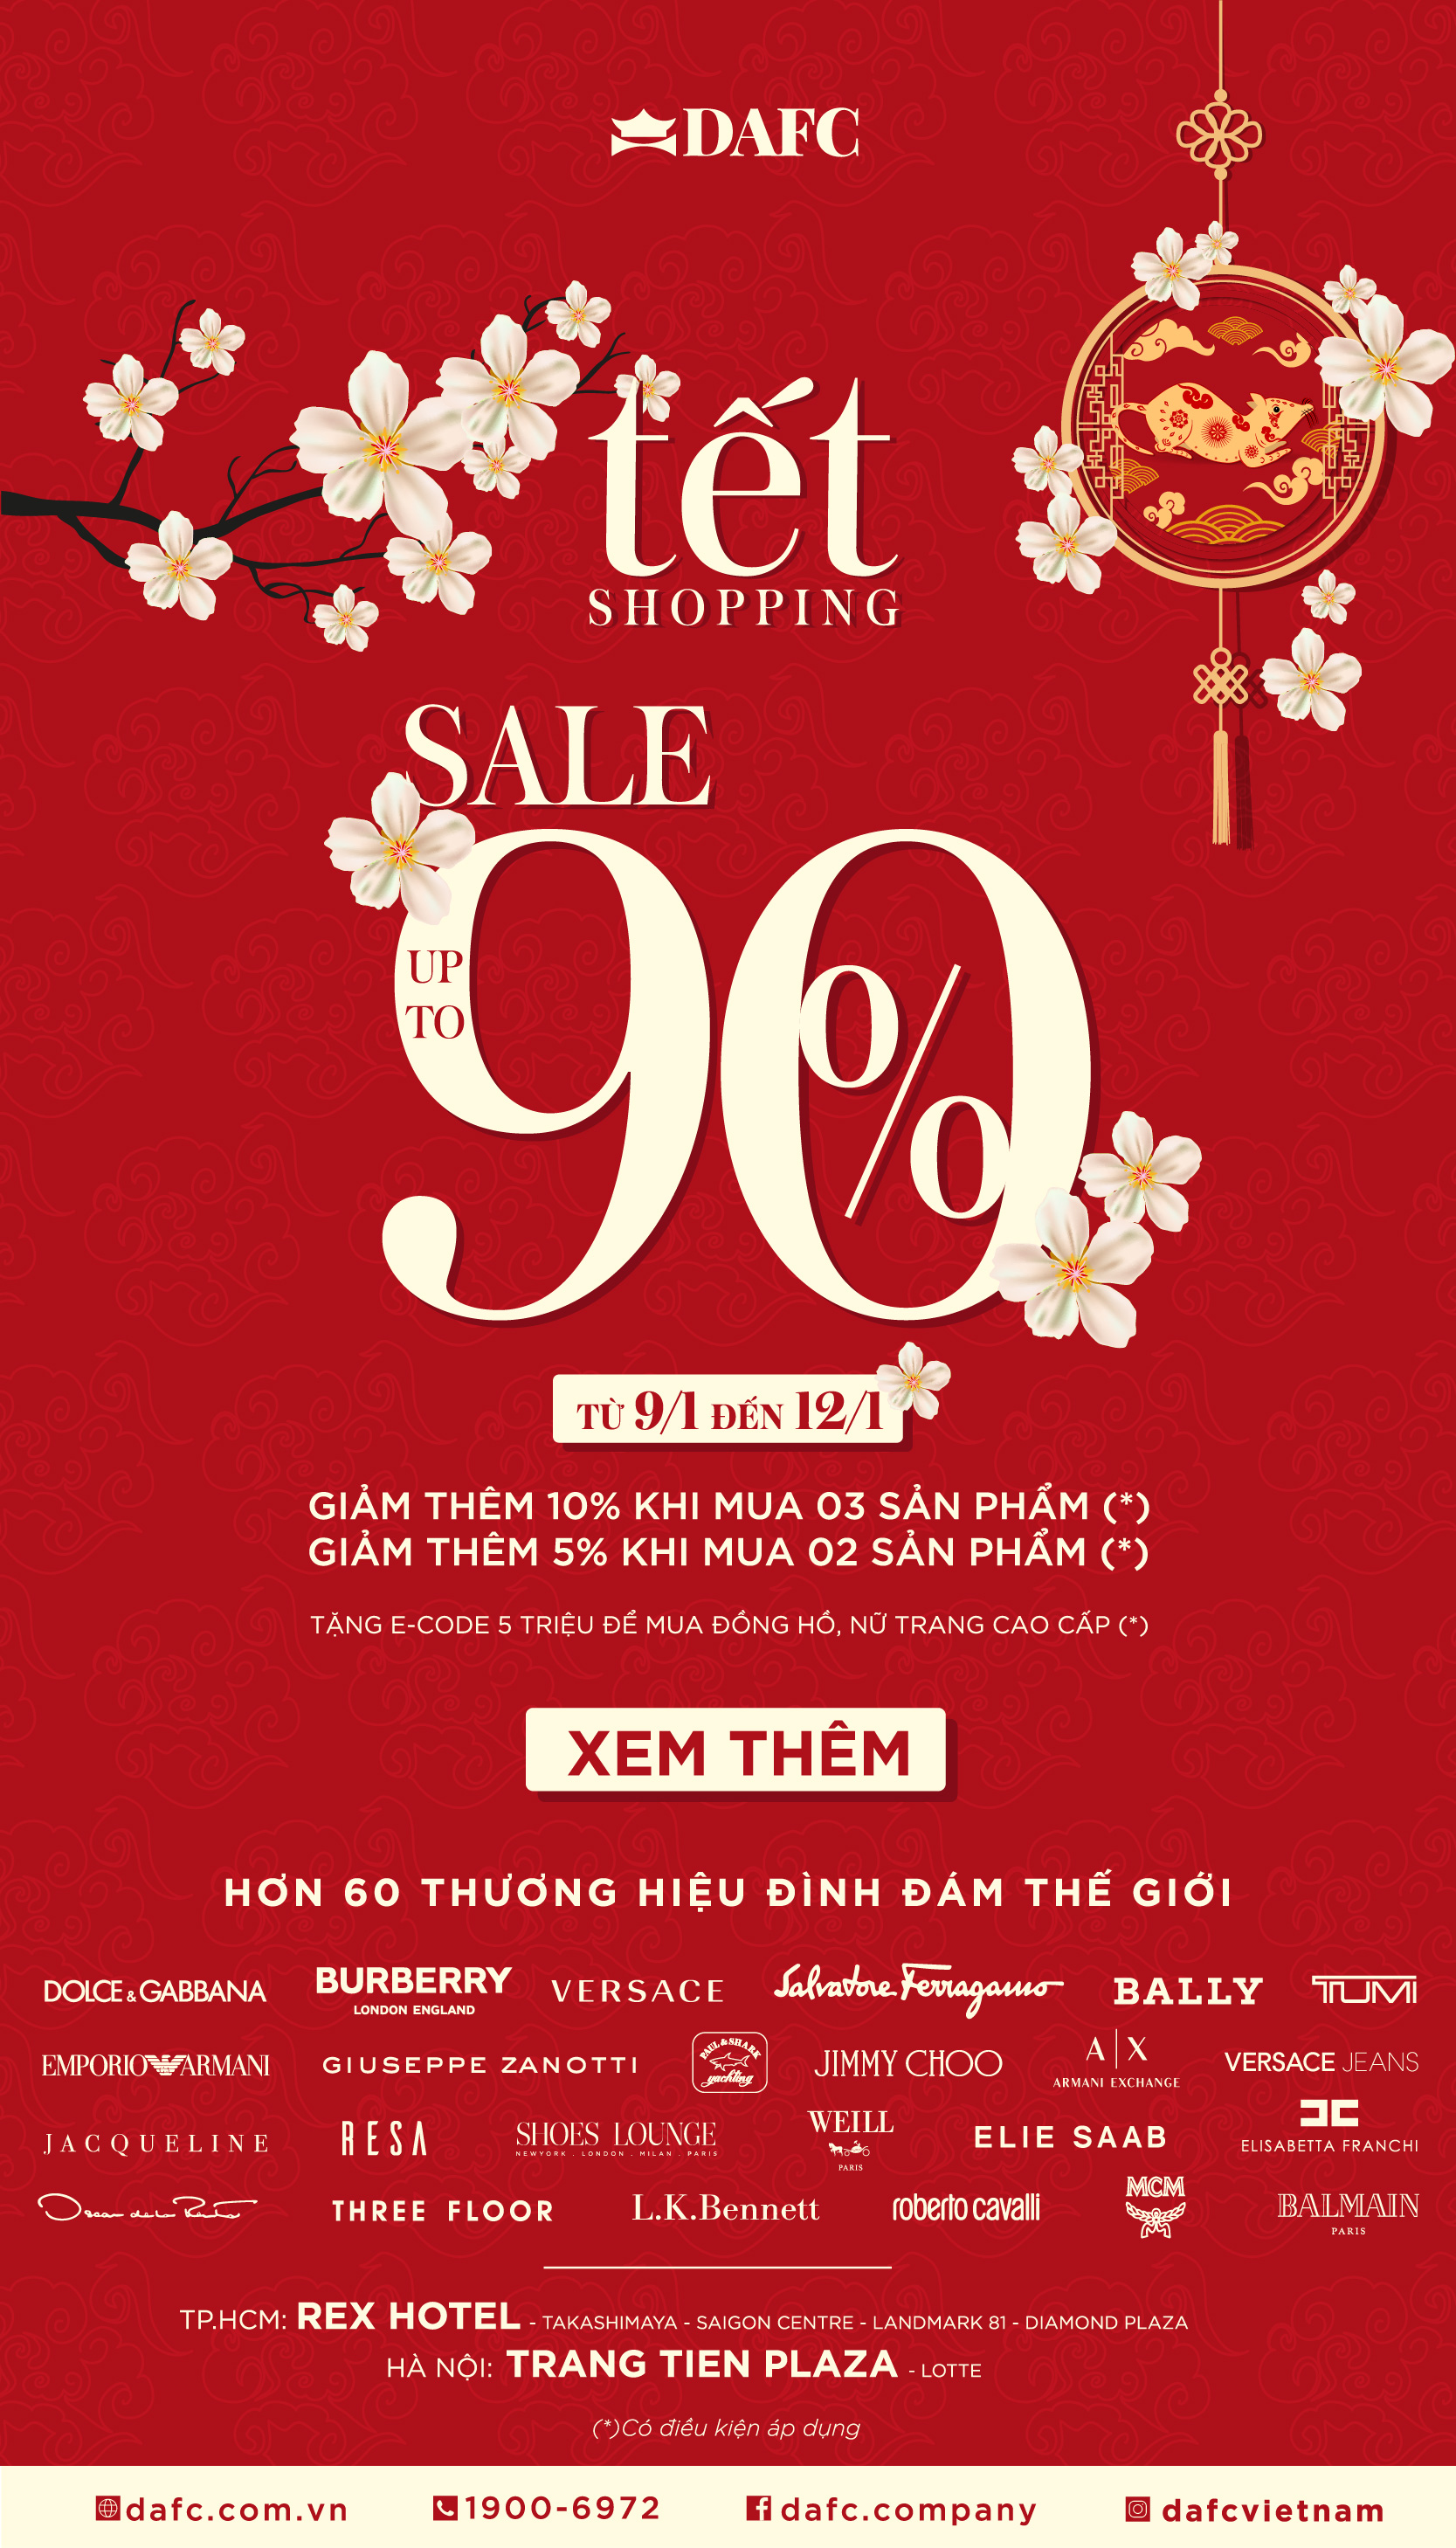 DAFC Sale shopping Tết